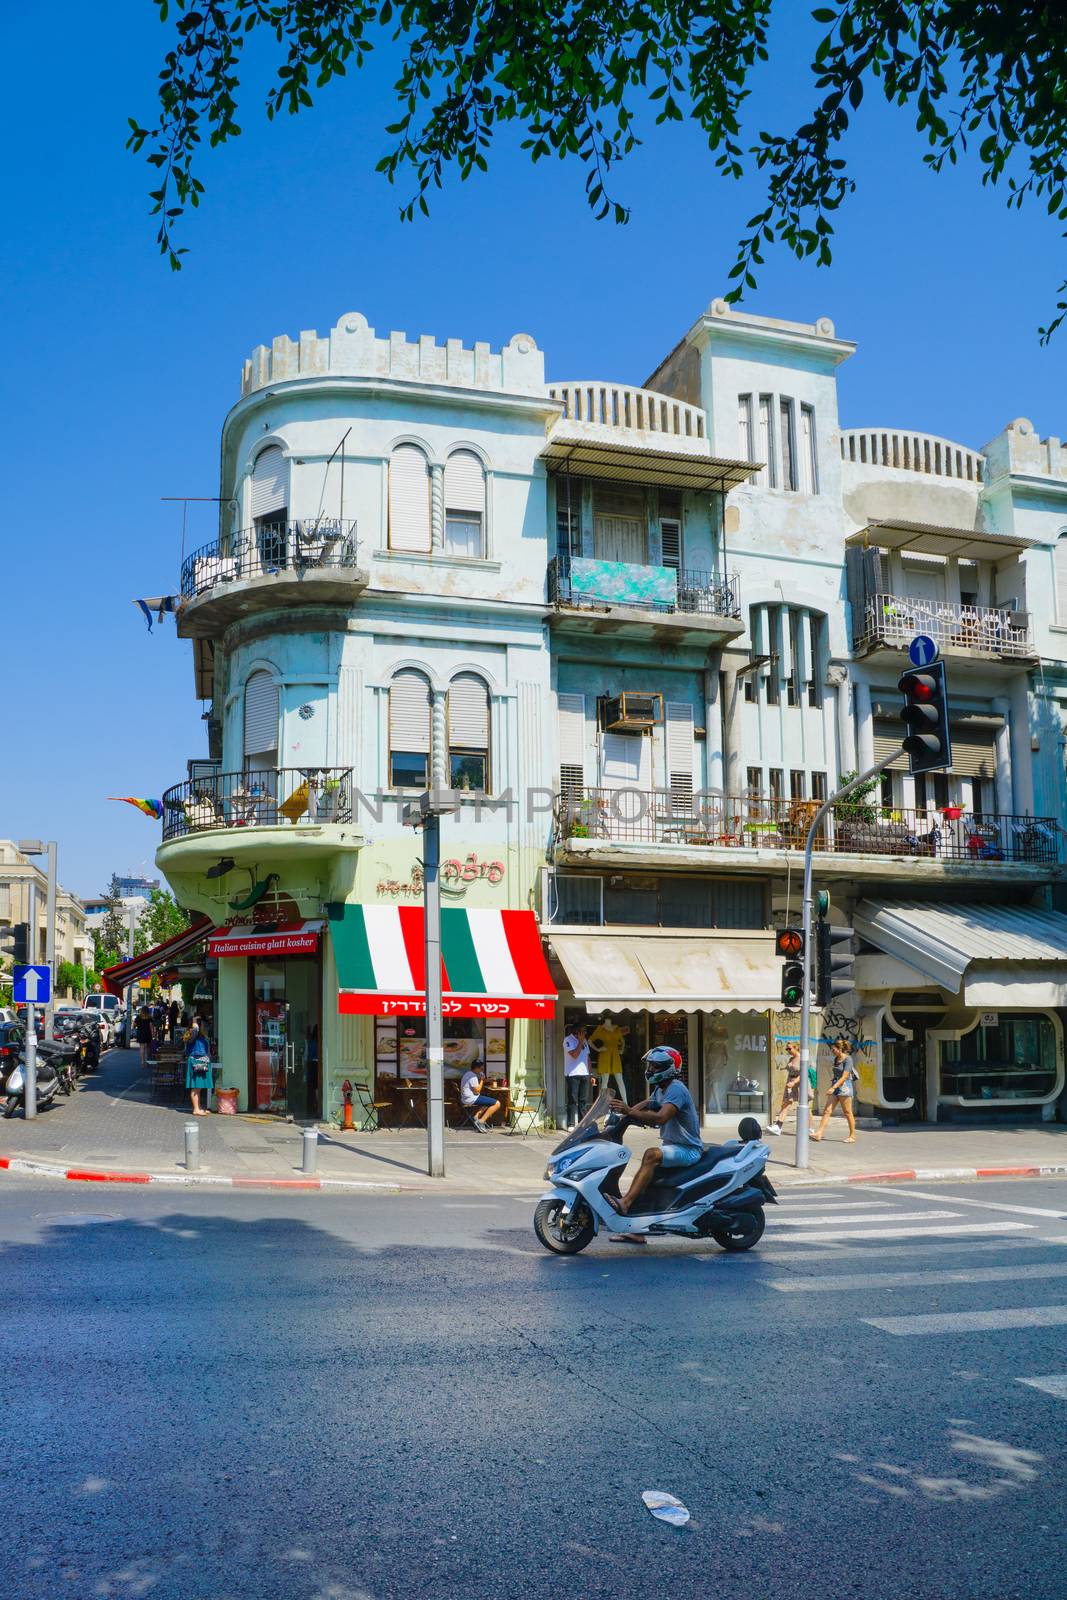 TEL-AVIV, ISRAEL - AUGUST 31, 2016: Scene of Allenby street, with Bauhaus style buildings, local businesses, locals and visitors. In Tel-Aviv, Israel